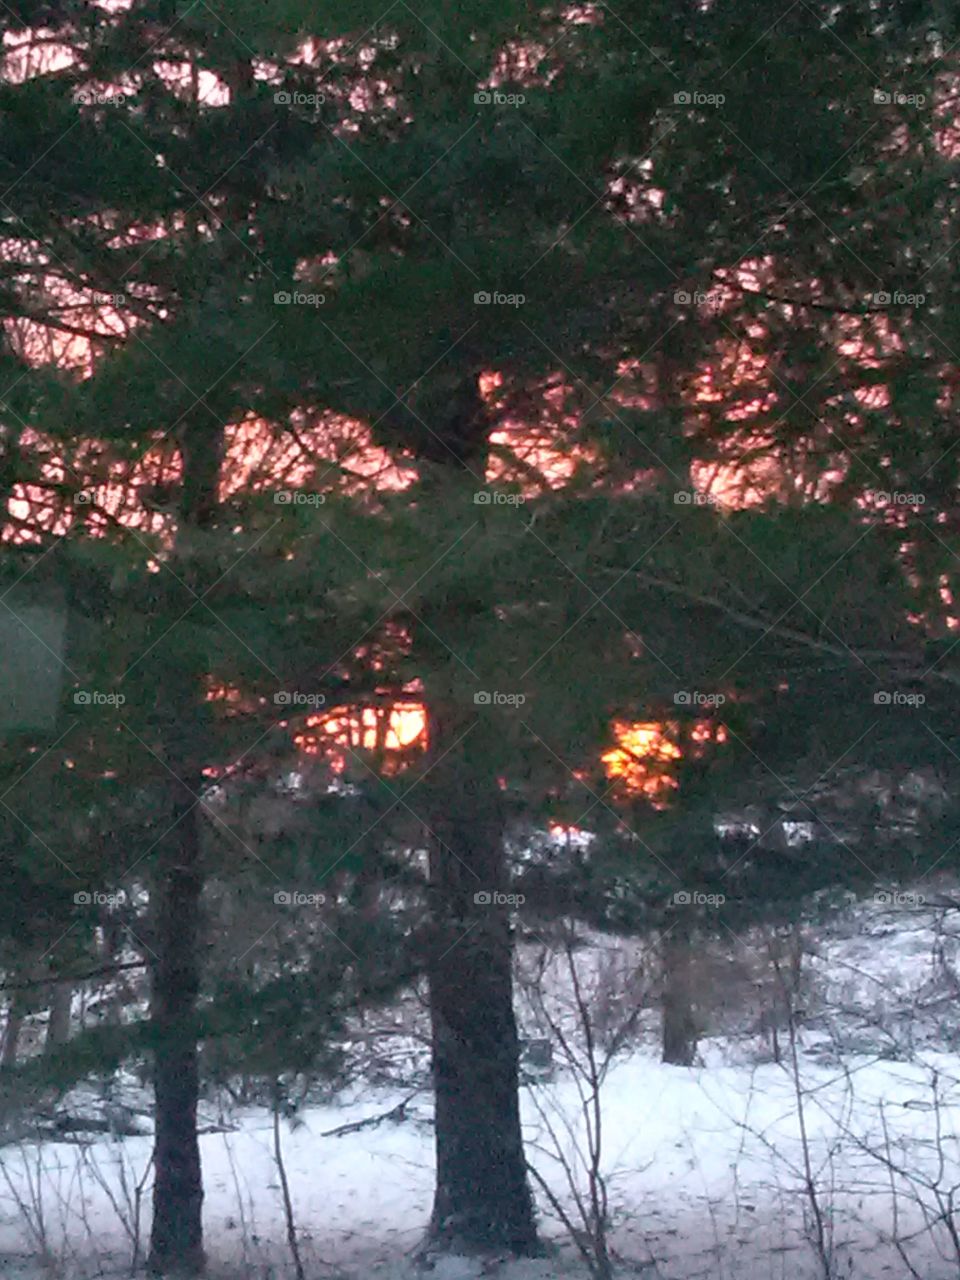 Sunrise through the pines